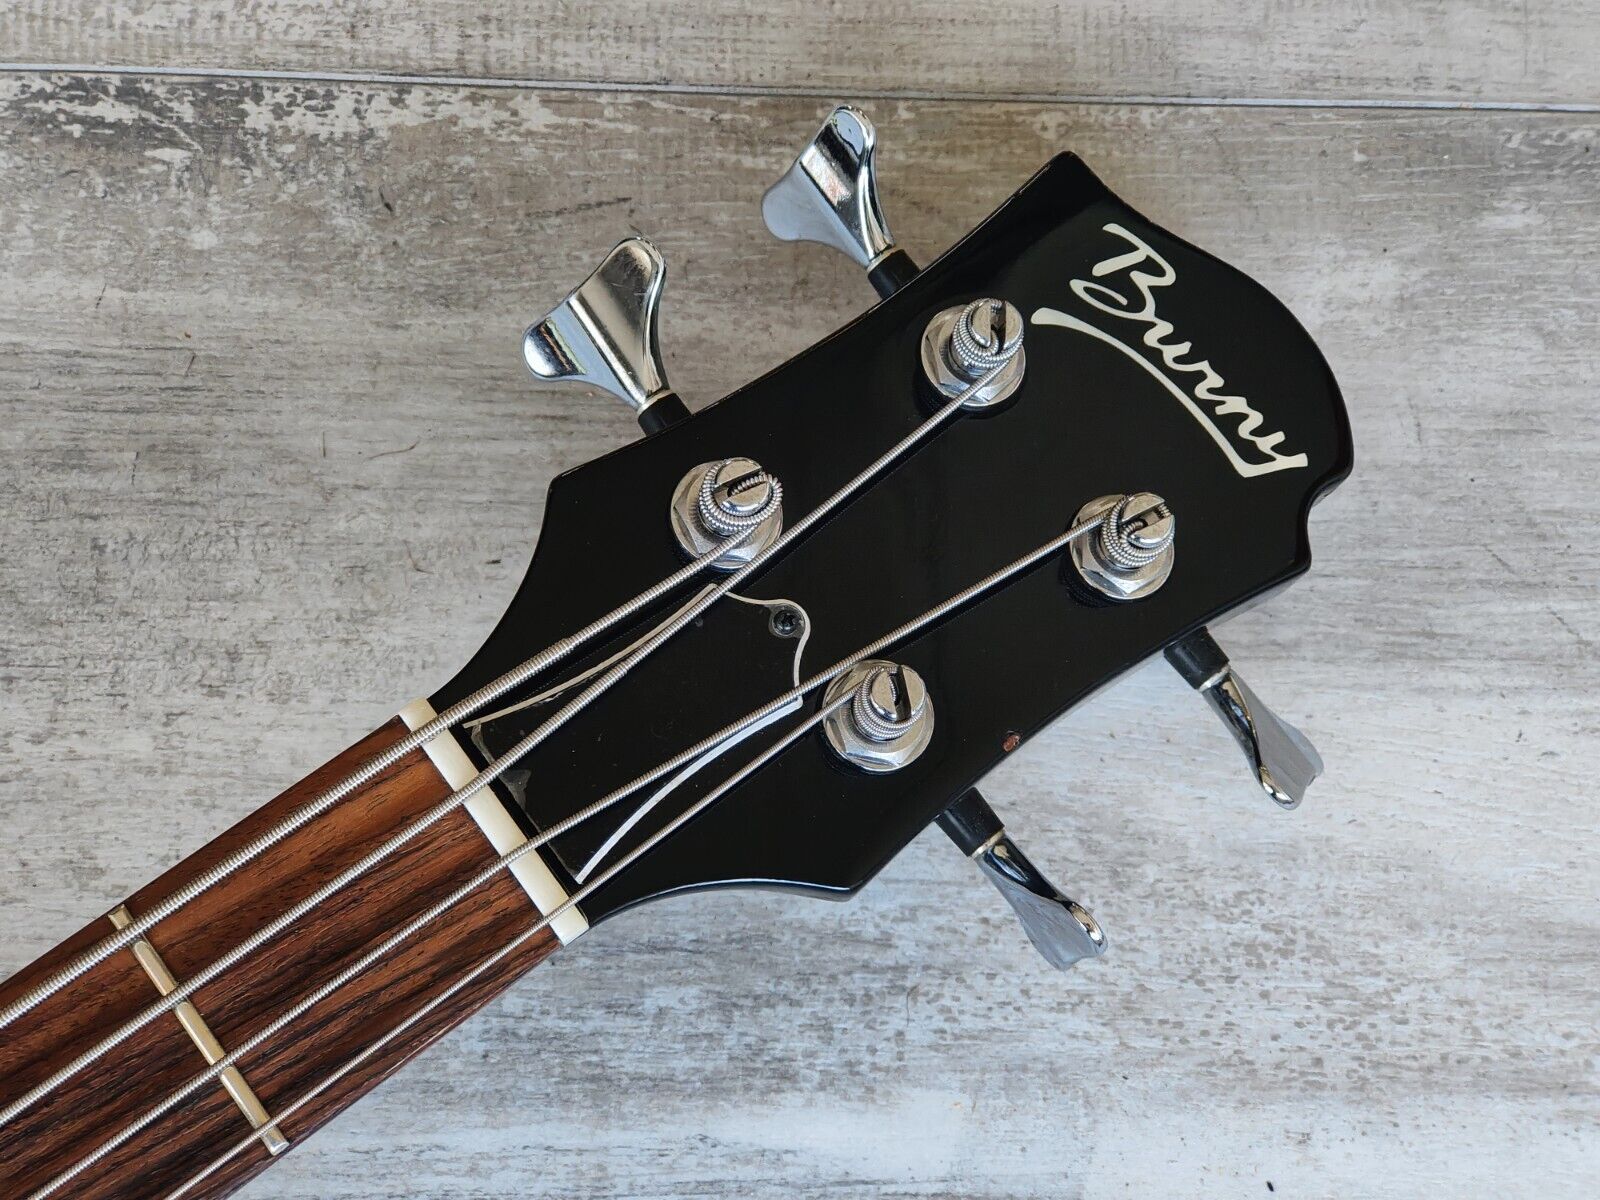 1996 Burny (Fernandes) EB-95X "X Japan" Signature Eagle Bass (Black)